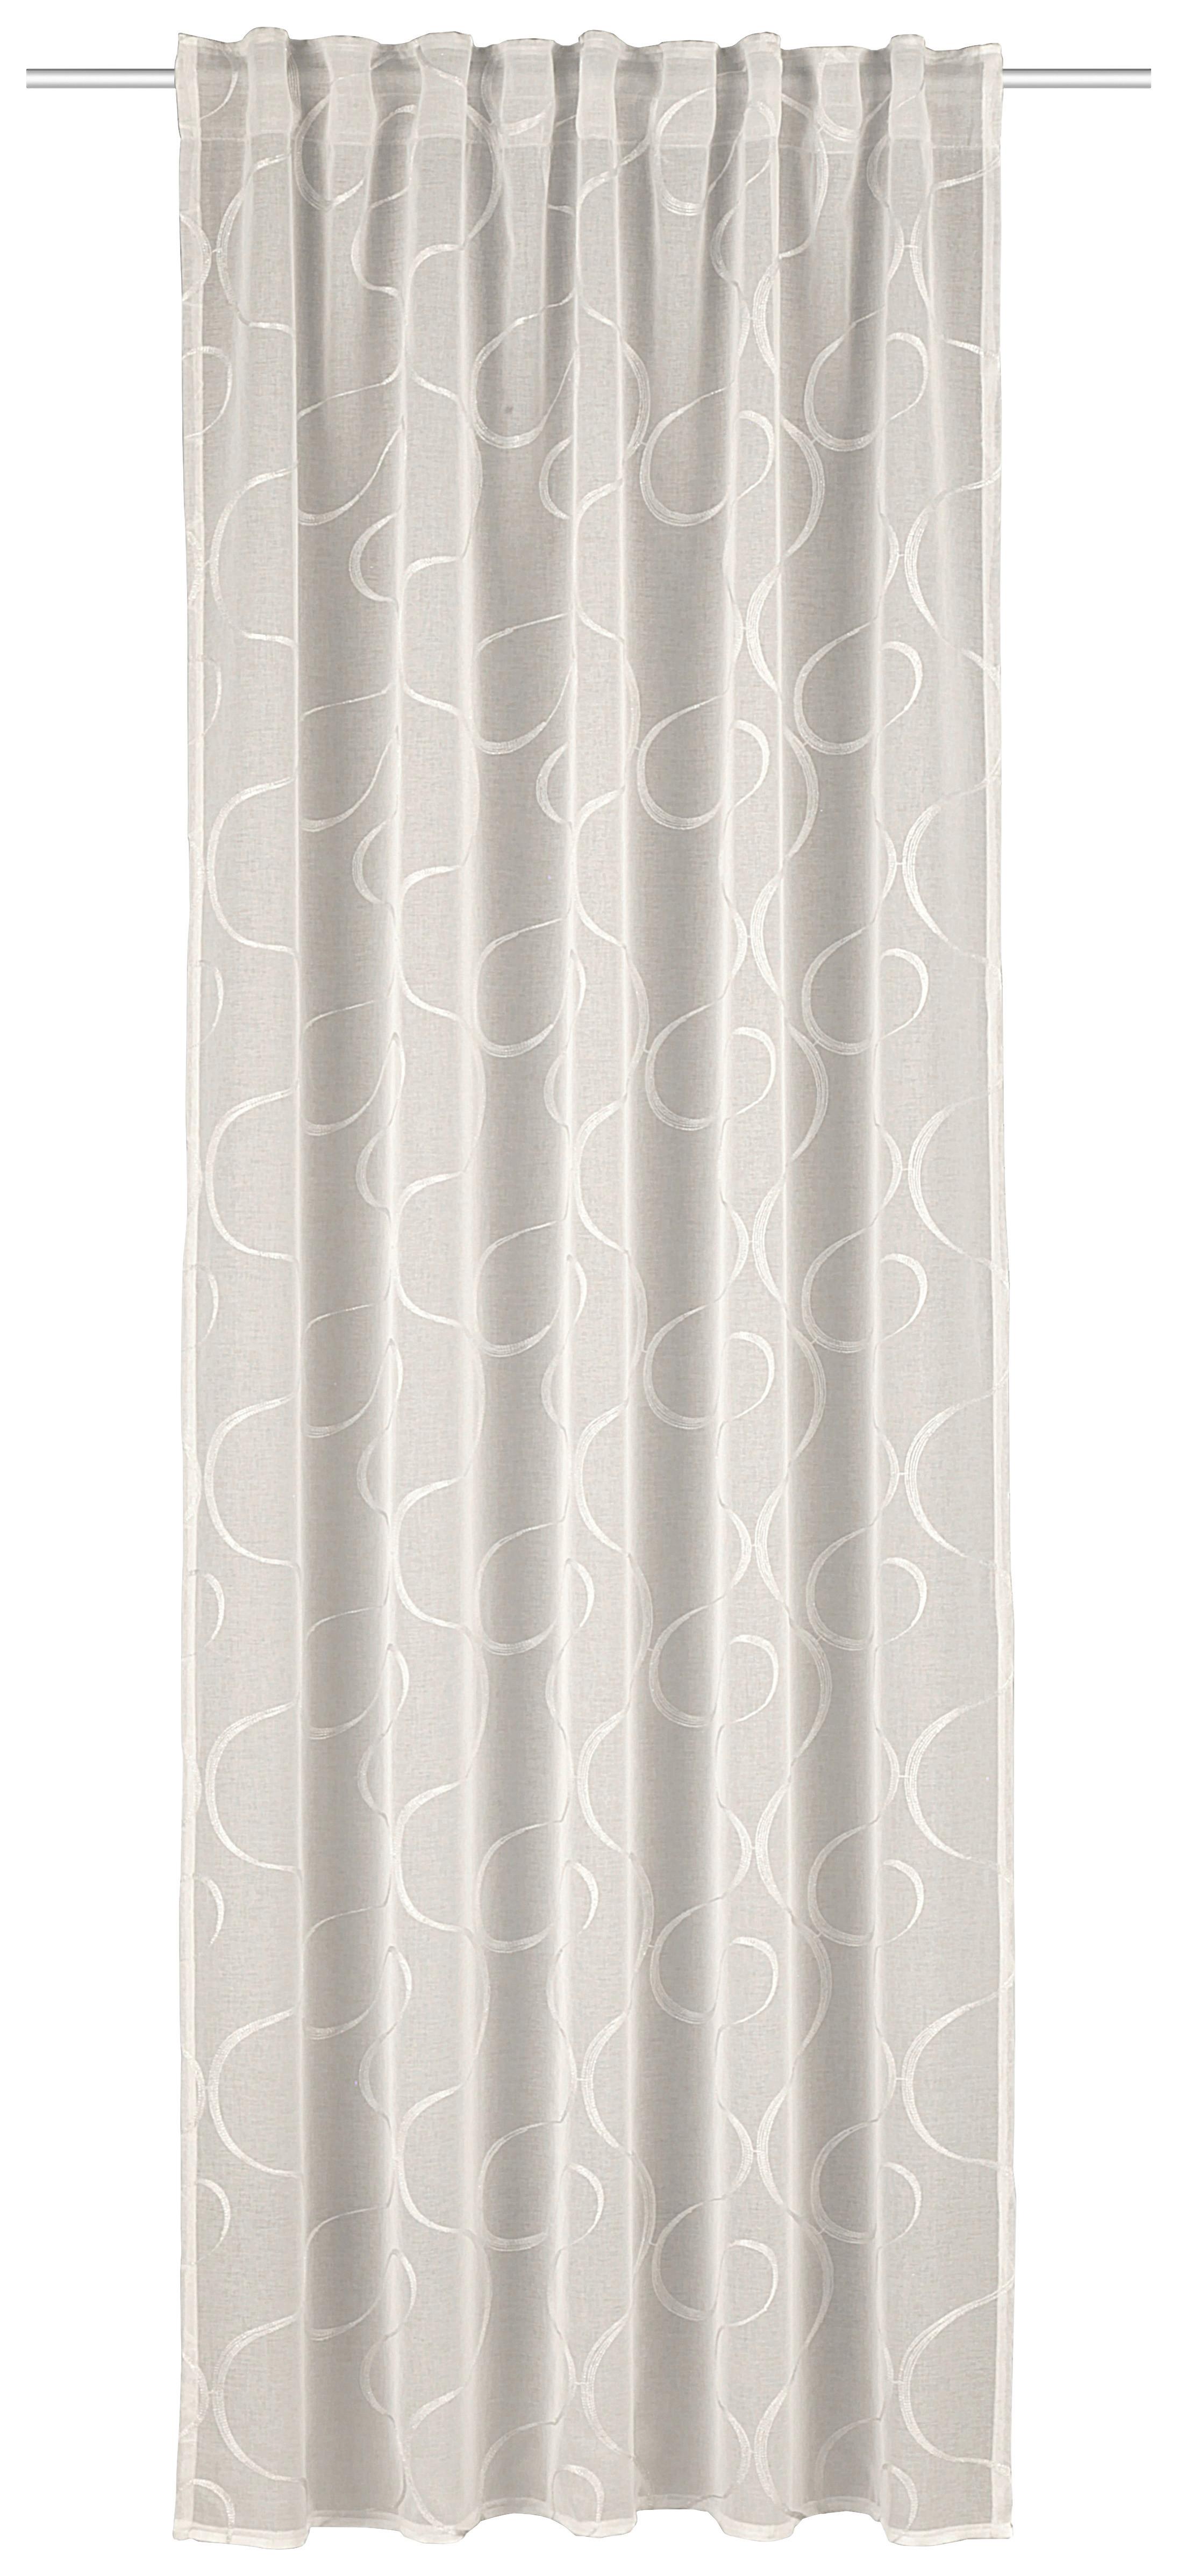 Készfüggöny Josefine - Krém, modern, Textil (135/245cm) - Luca Bessoni